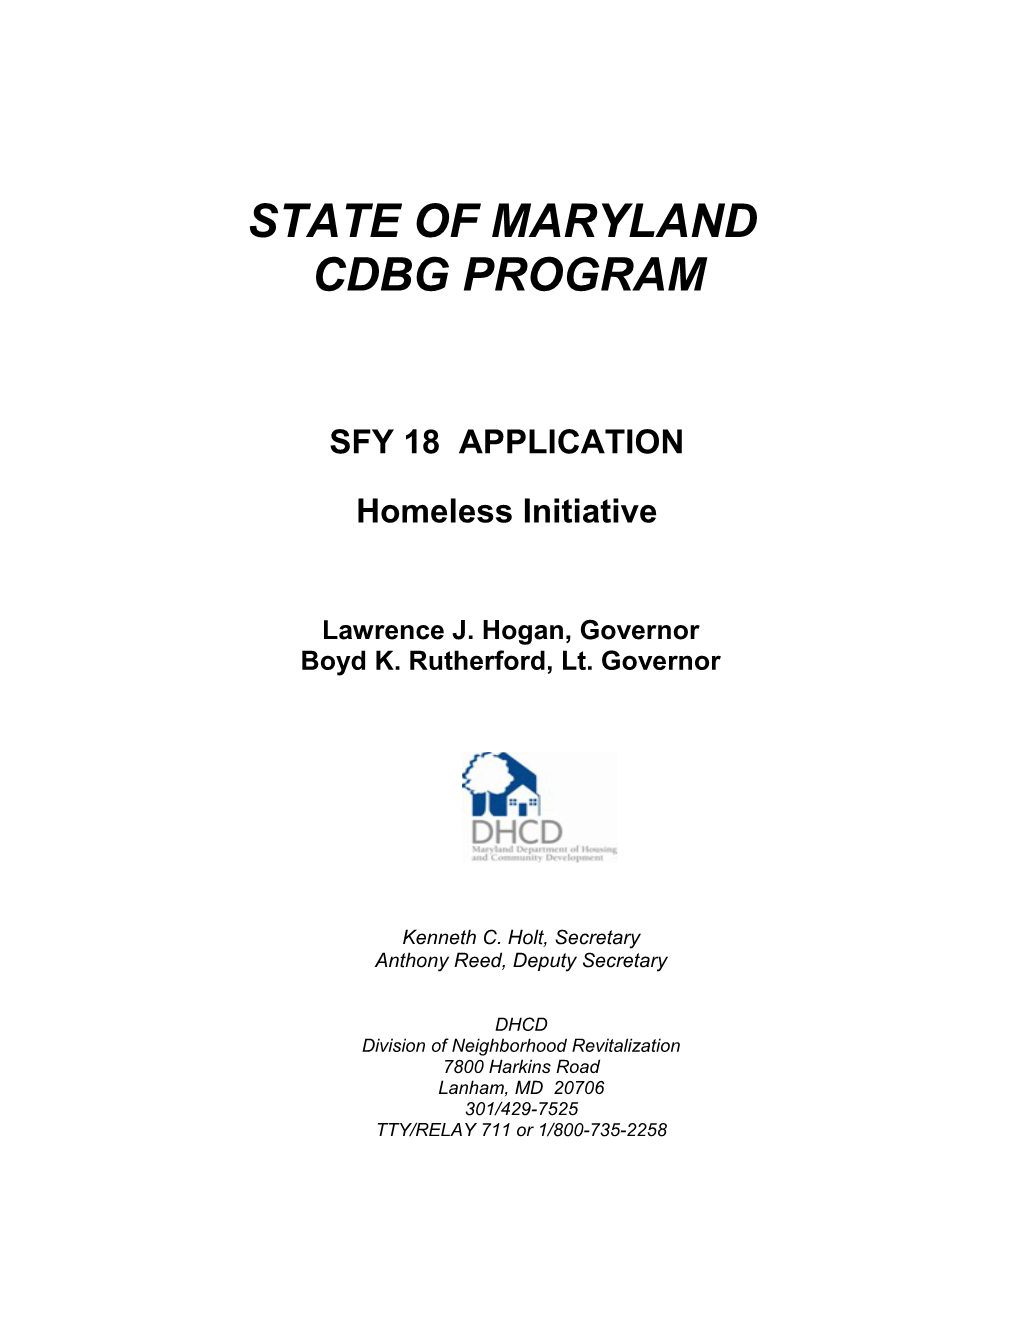 Maryland Community Development Block Grant (Cdbg) Program